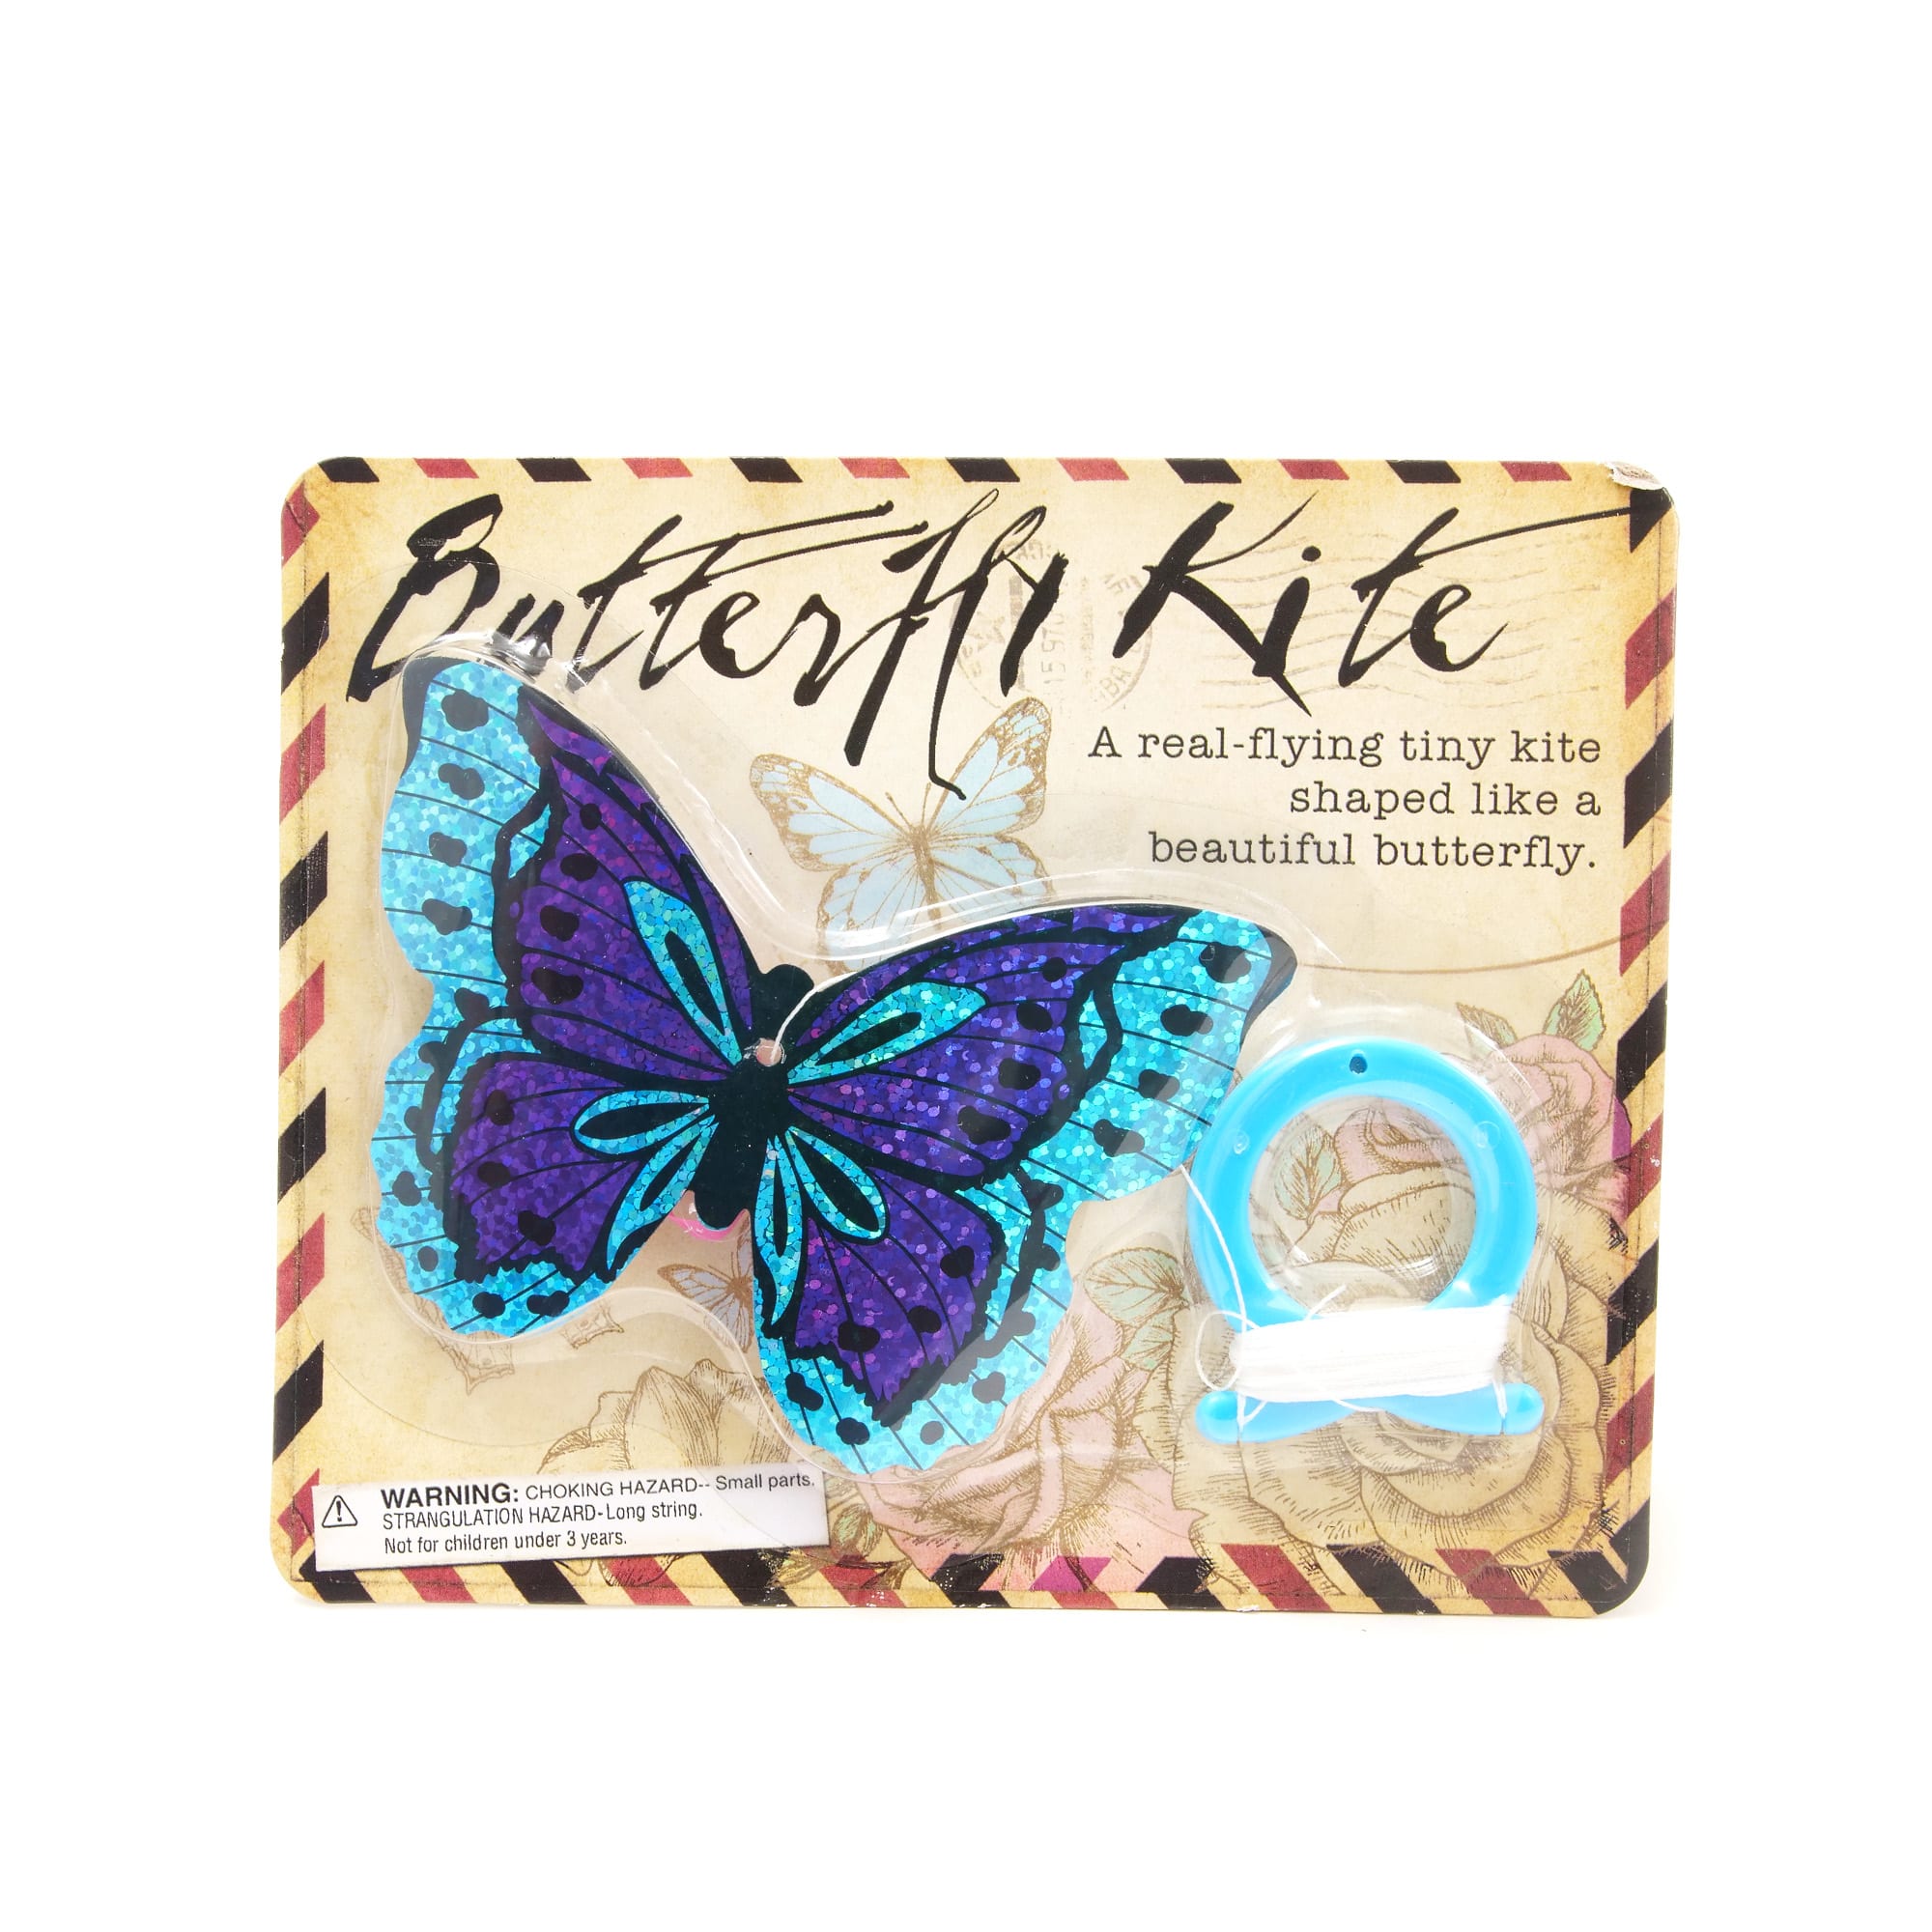 Mini Microlite Mylar Kite Butterfly Kite 4.7" Wingspan NEW in Package 